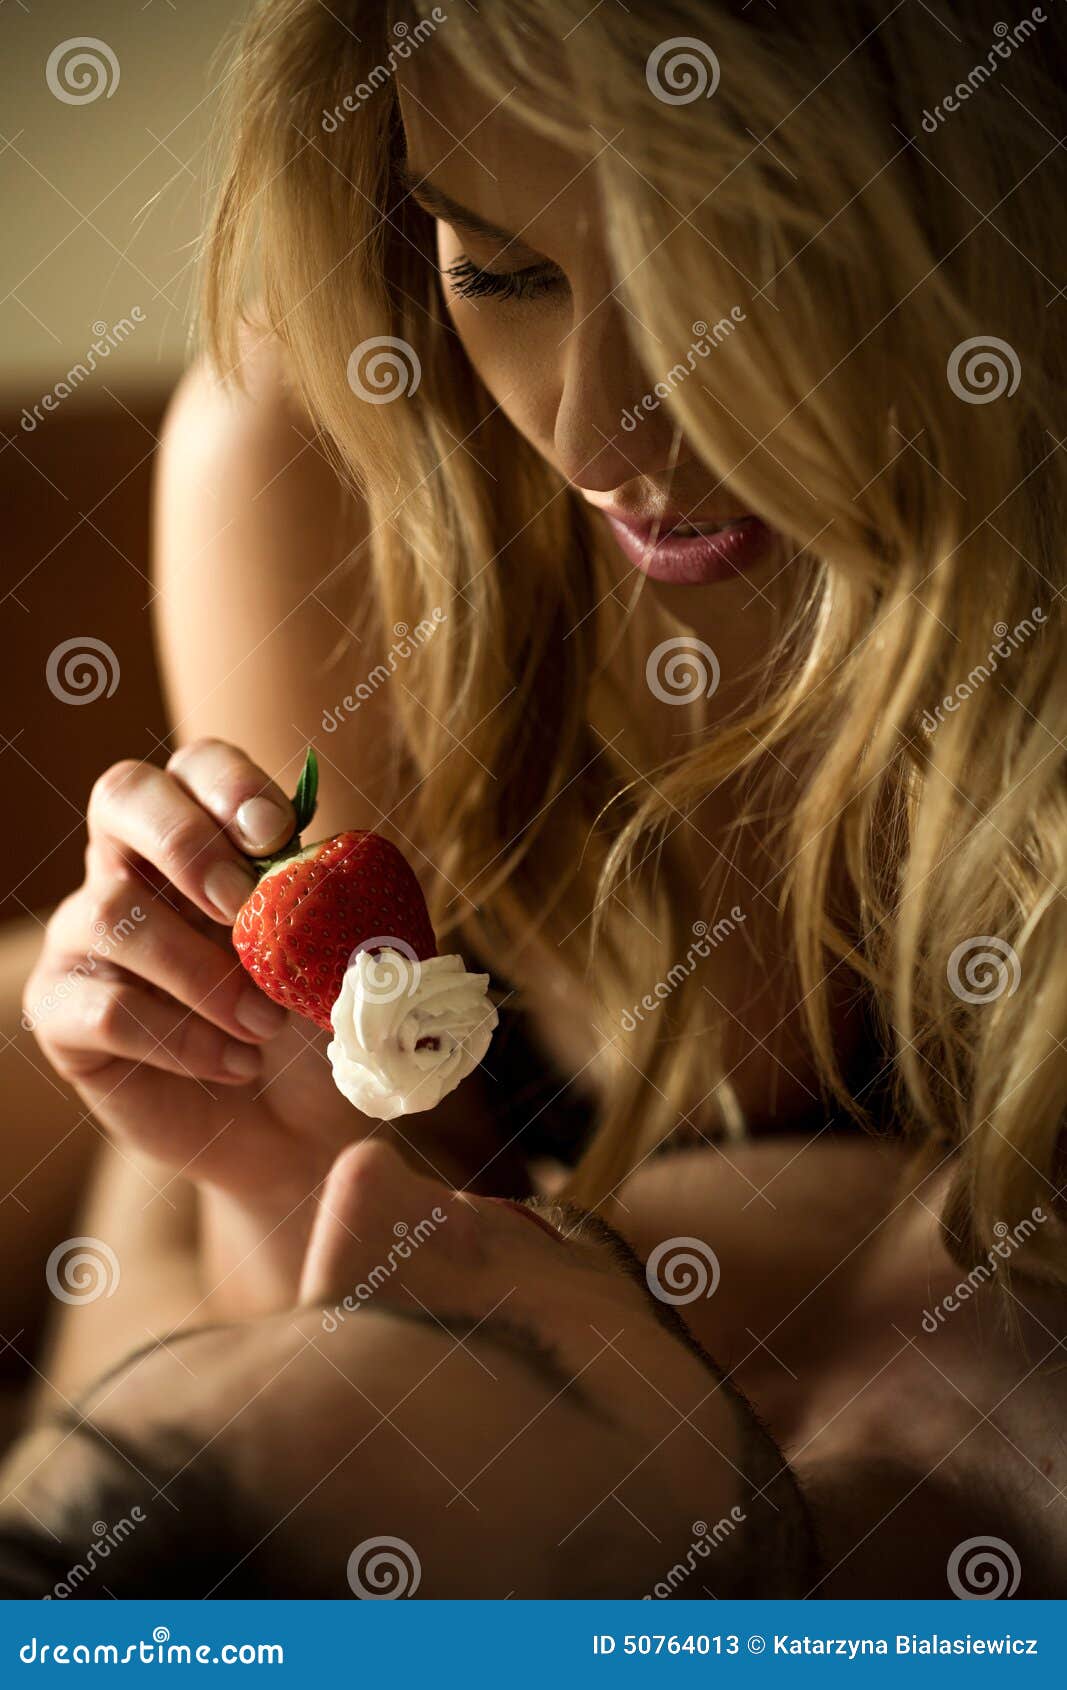 https://thumbs.dreamstime.com/z/strawberry-whipped-cream-sexy-women-feeding-men-50764013.jpg